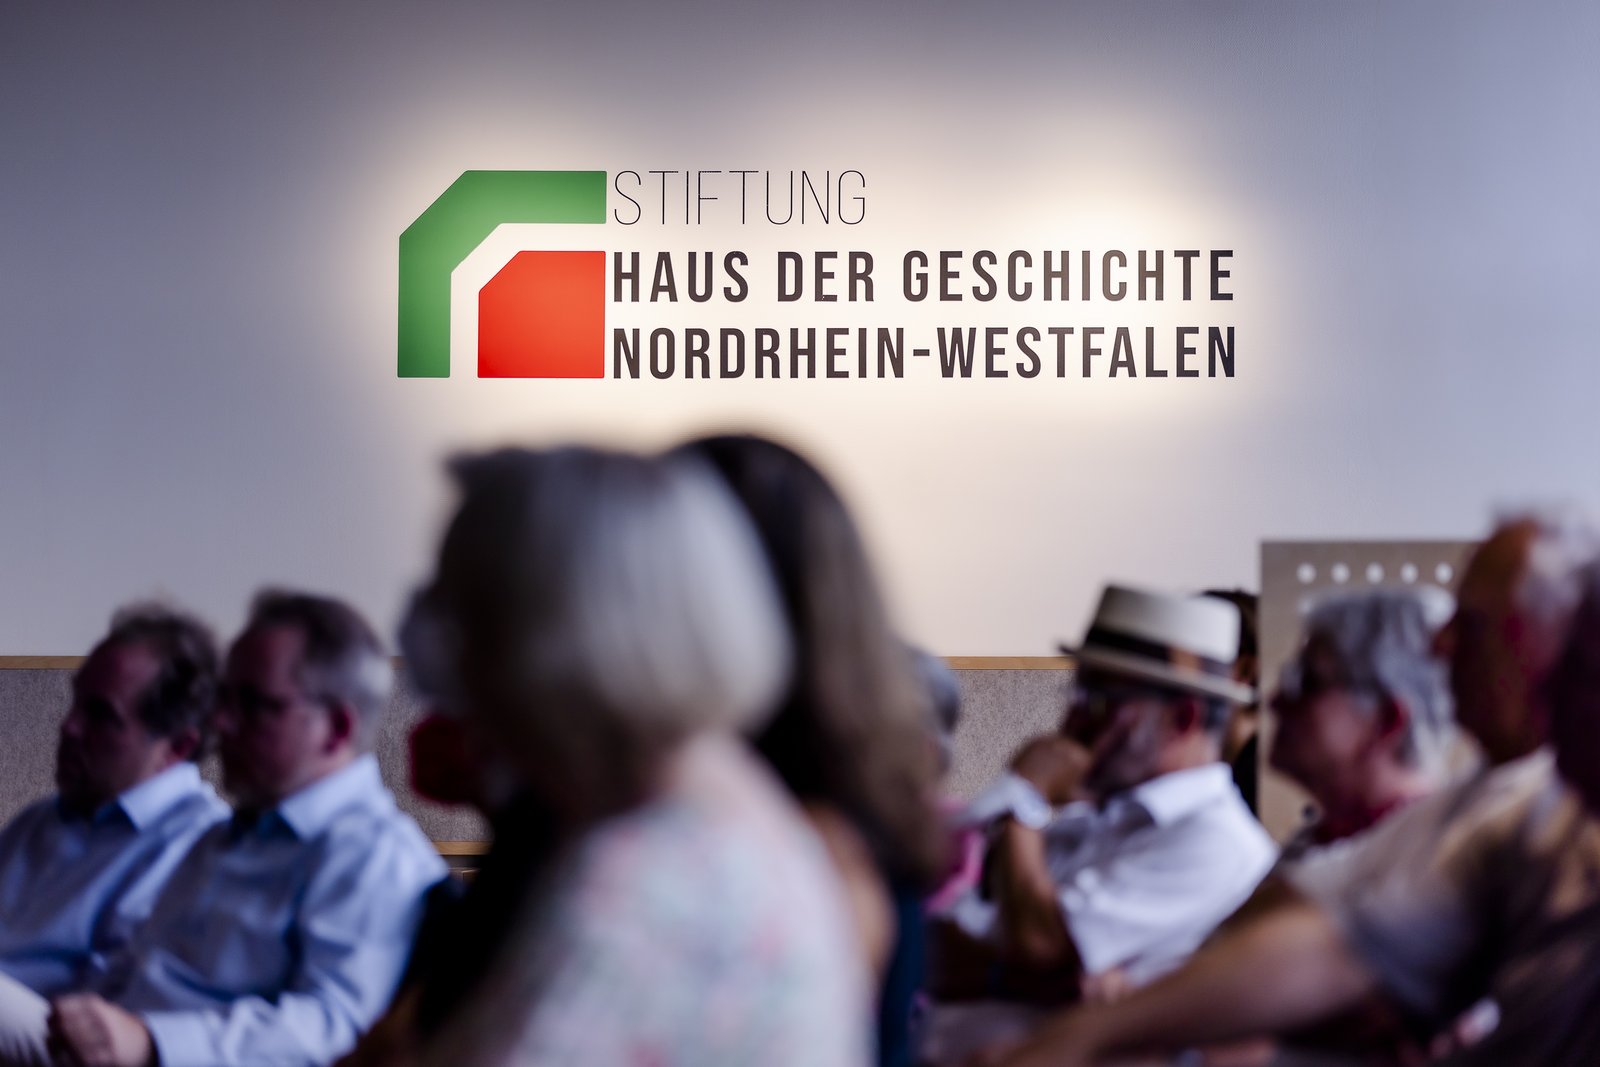 Foundation of House of History of North Rhine-Westphalia